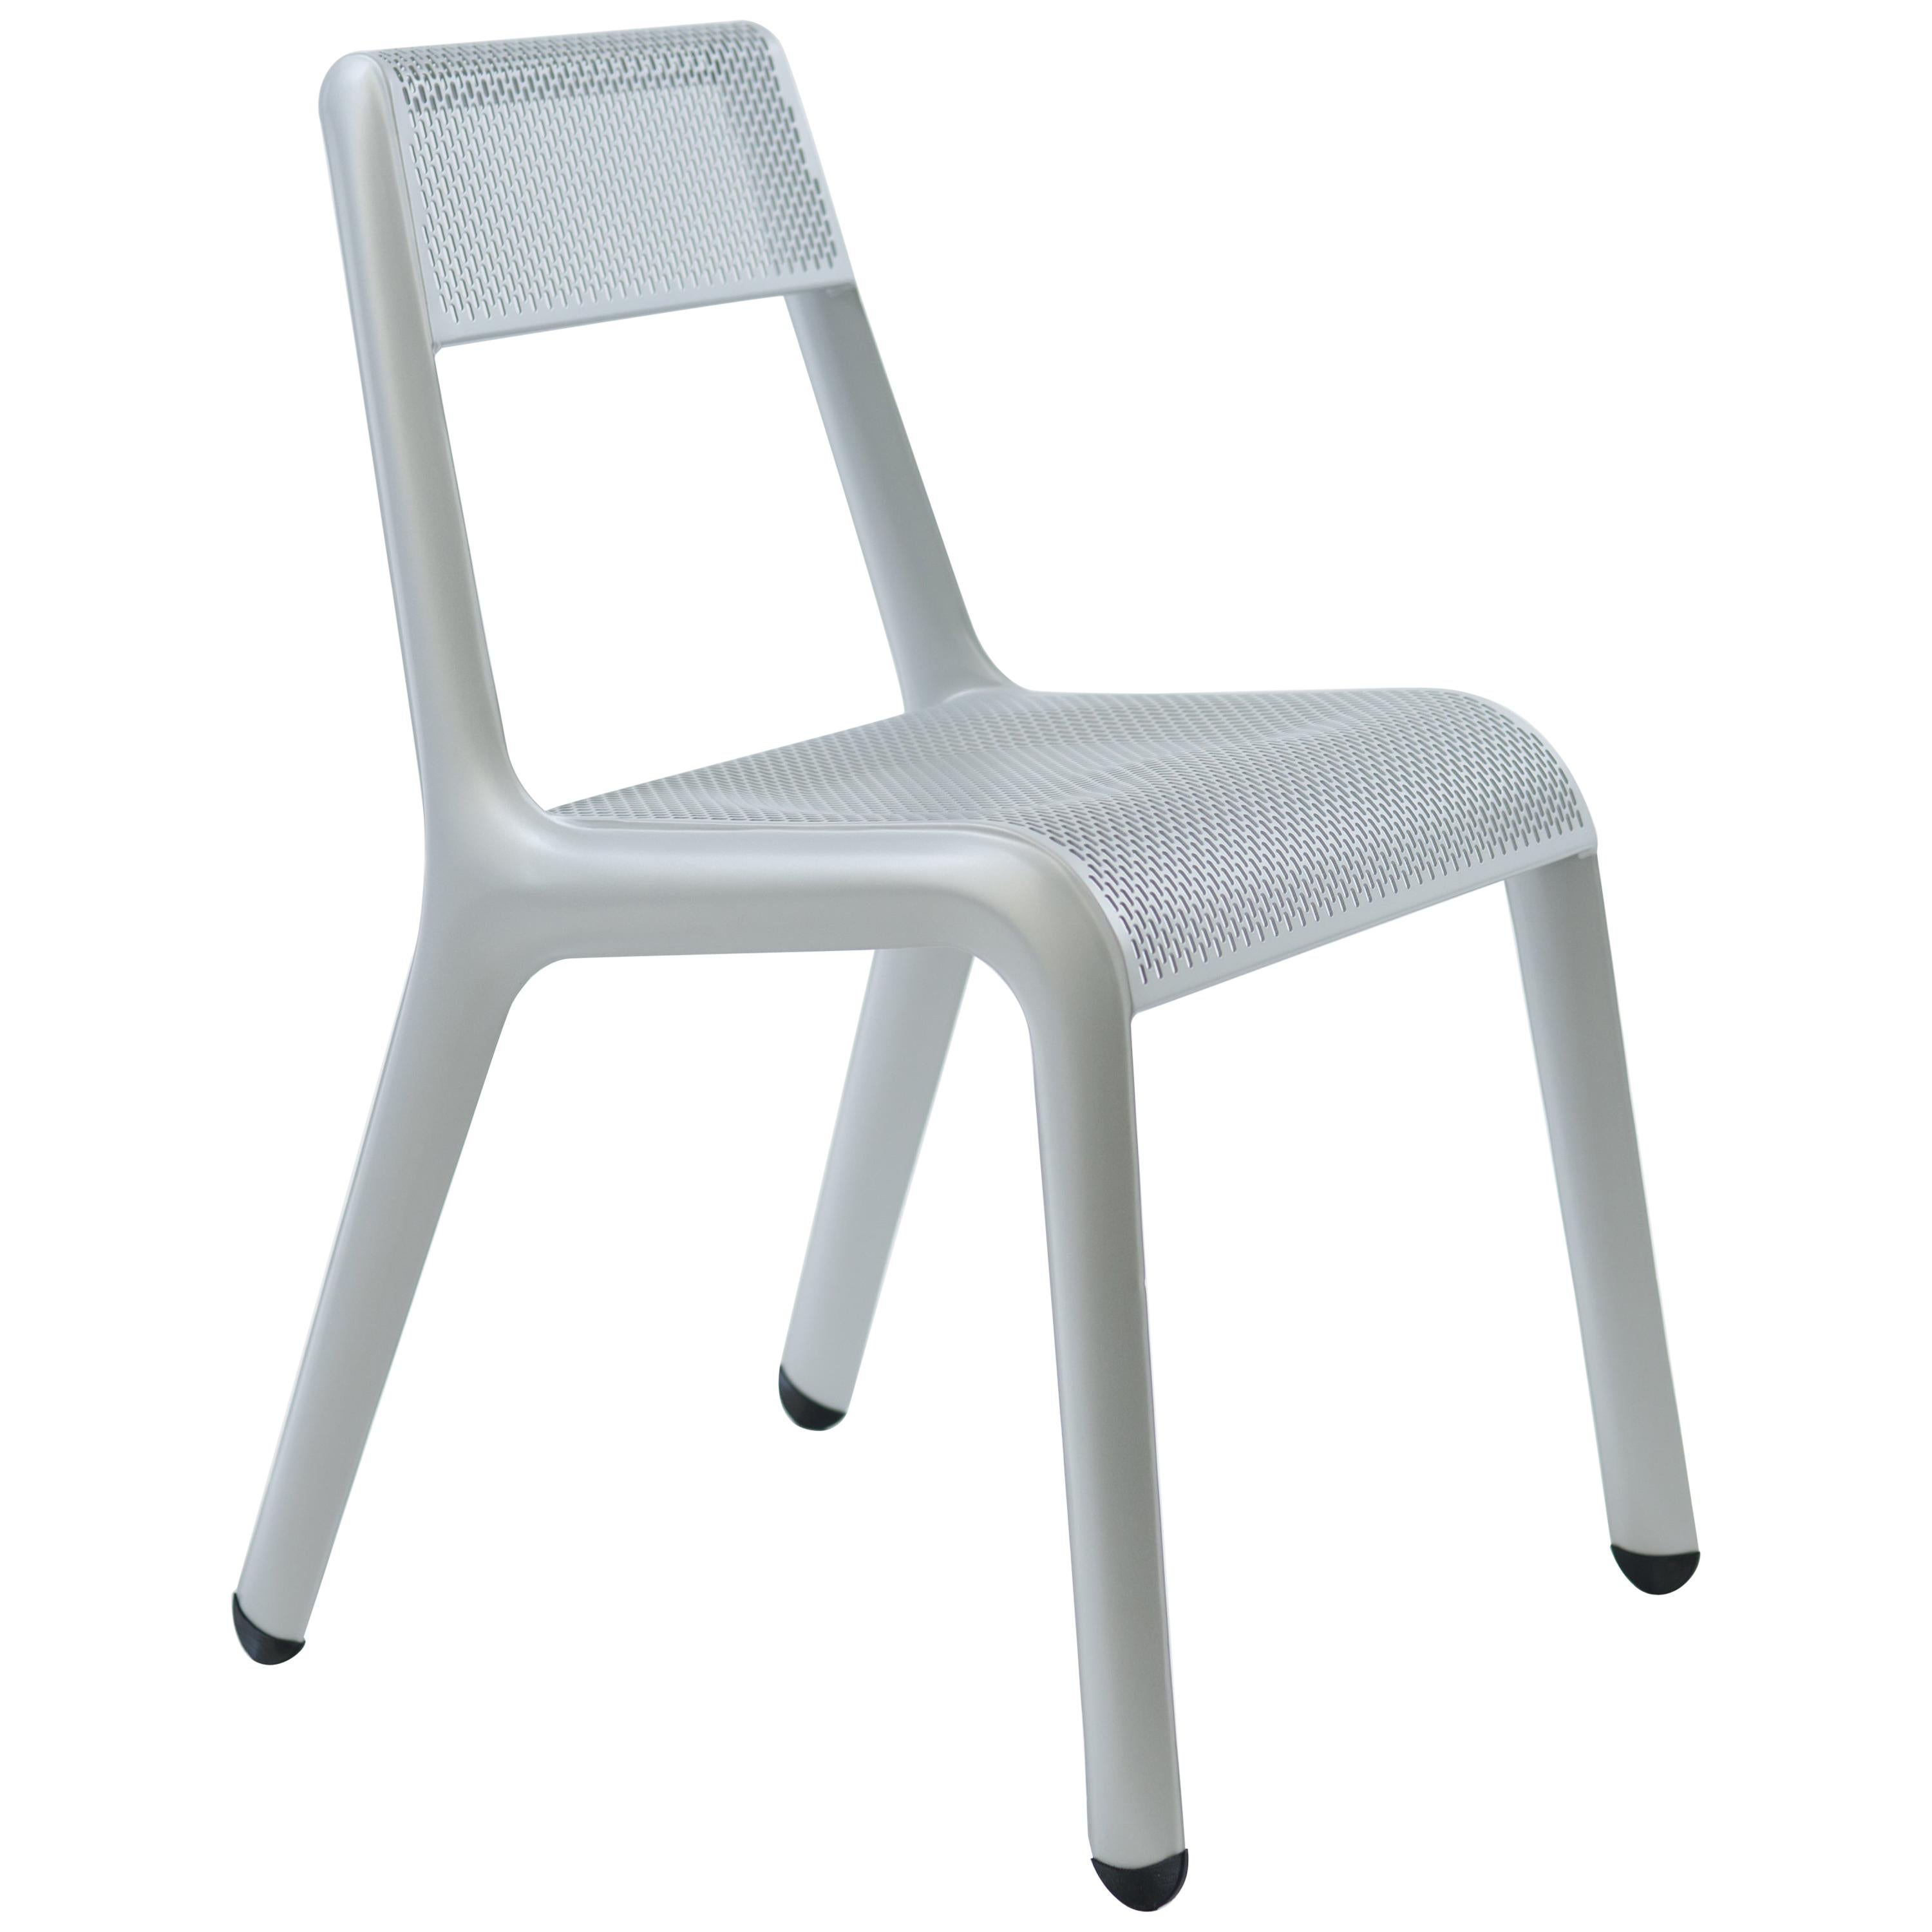 Ultraleggera Anodic Nature Color Aluminum Seating by Zieta For Sale